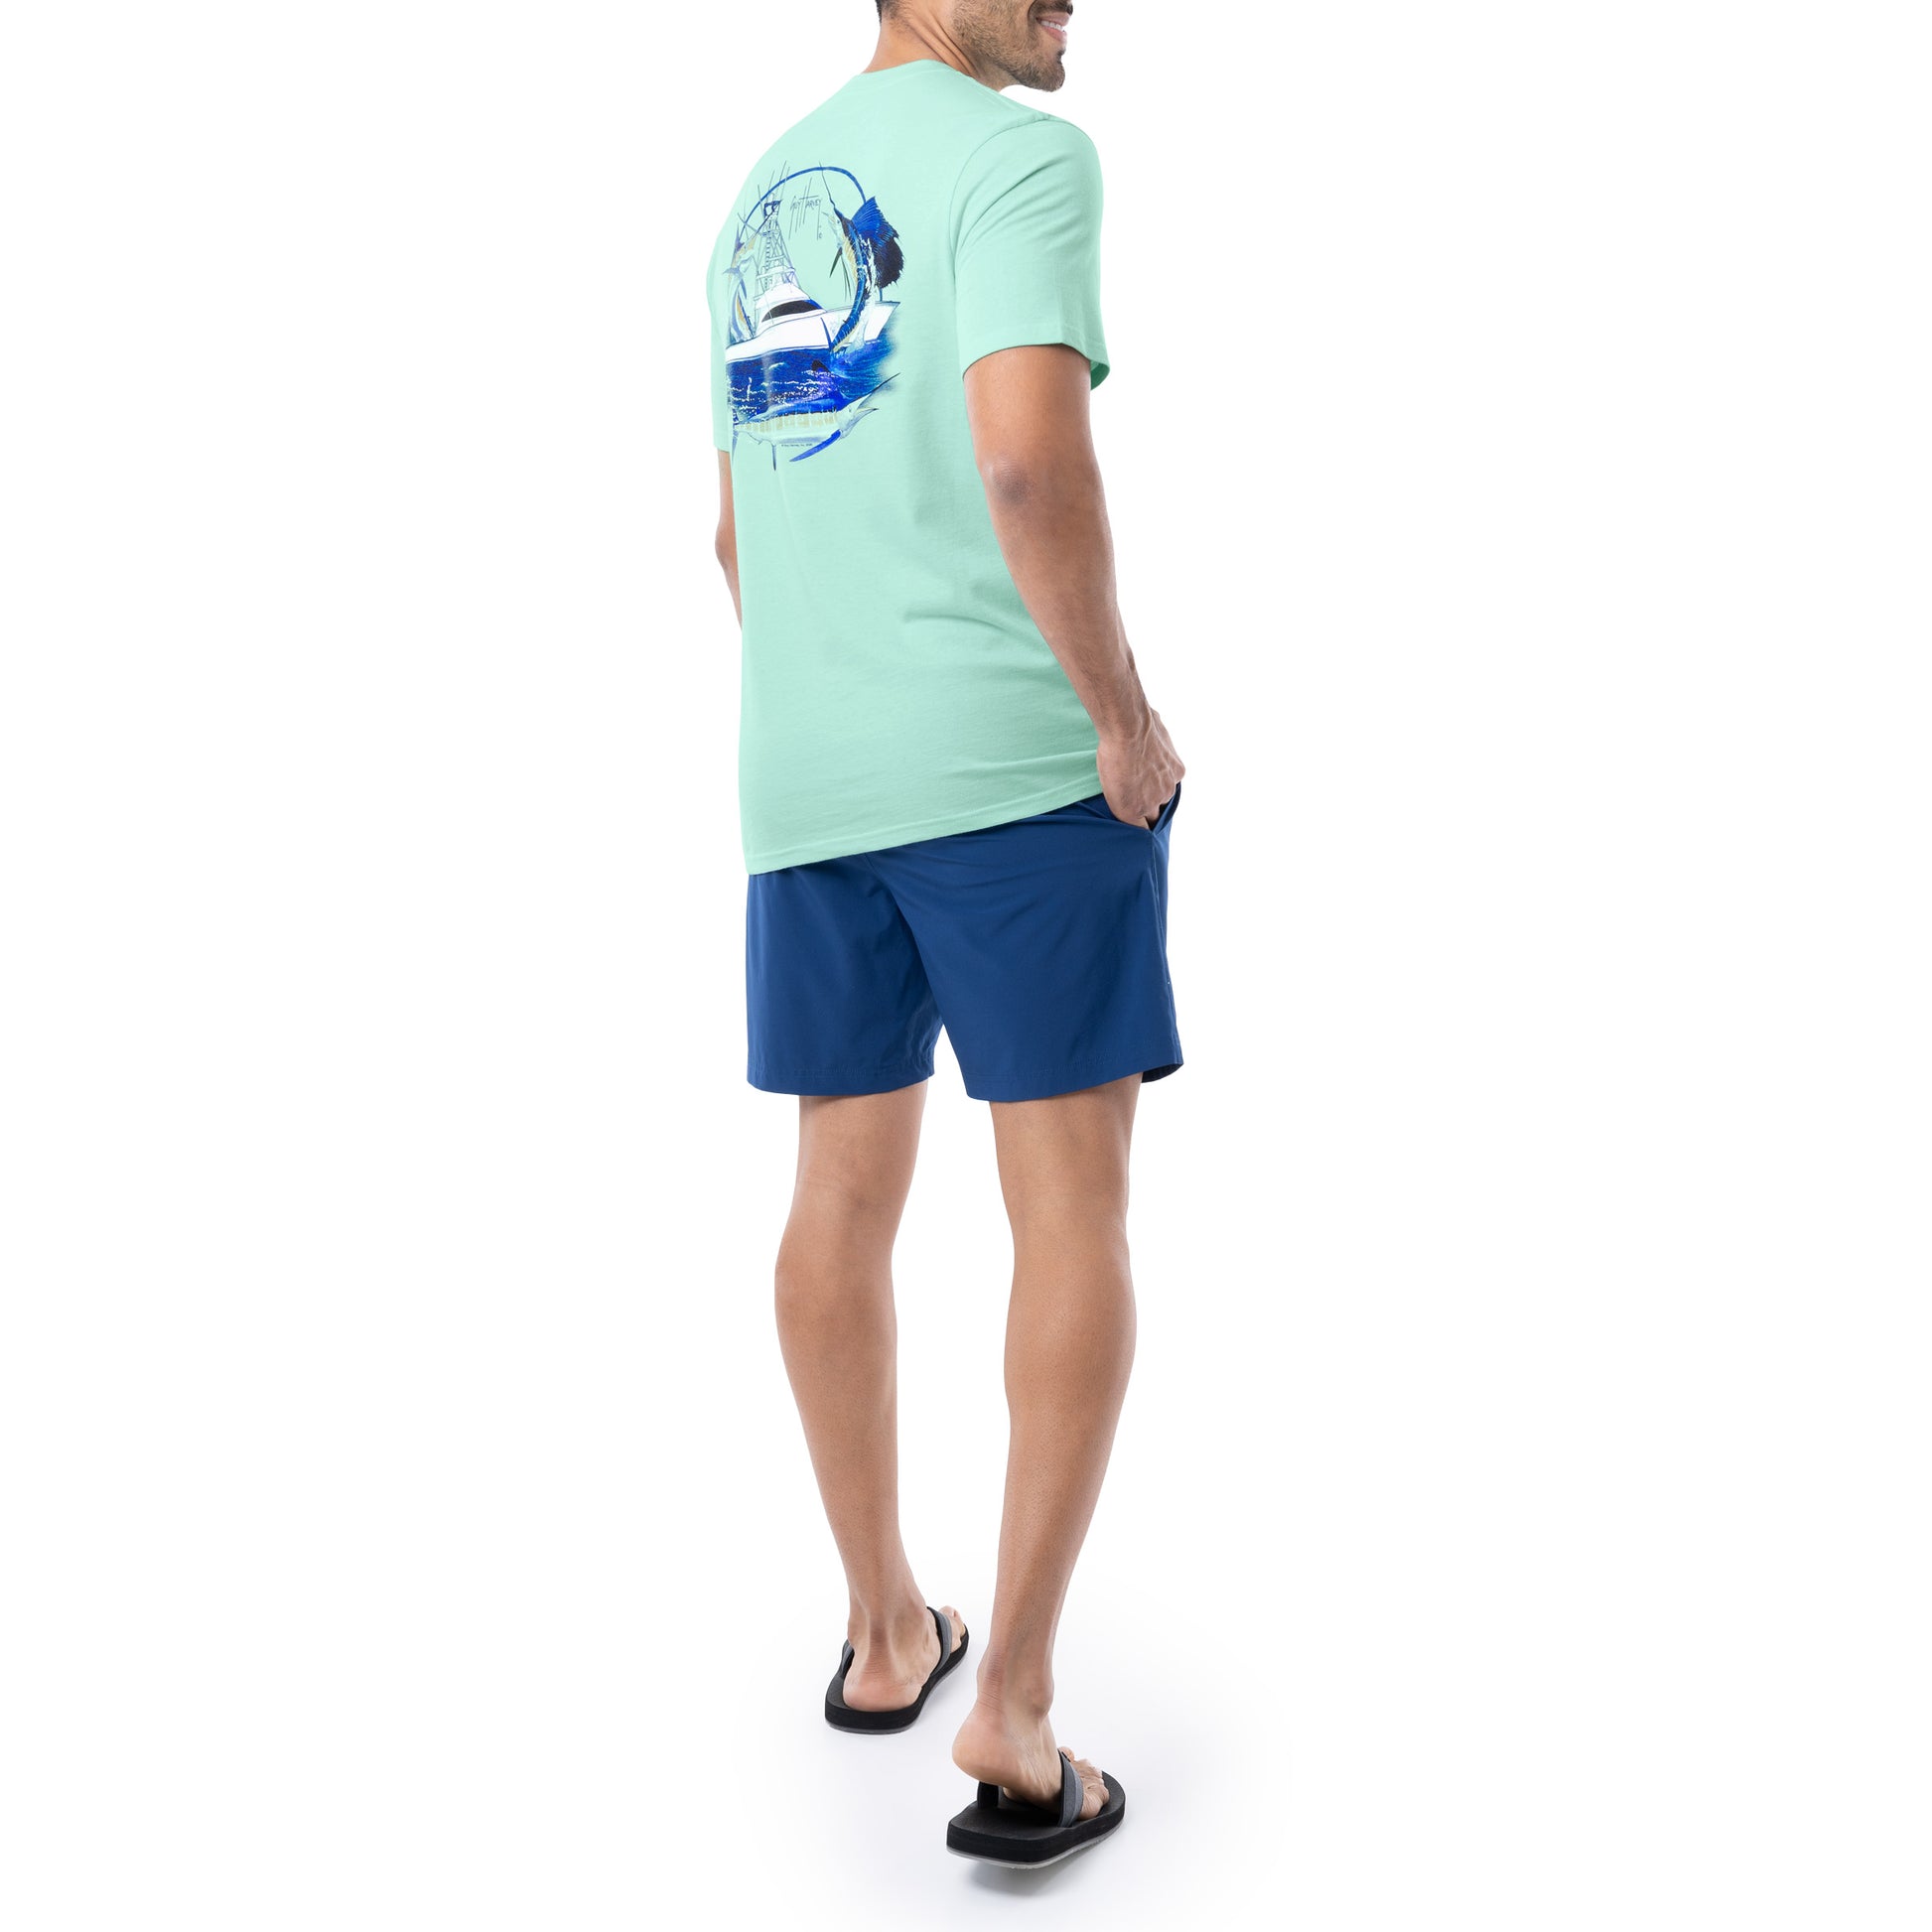 Ariat Adults Mr Marlin Fishing Shirt - W. Titley & Co